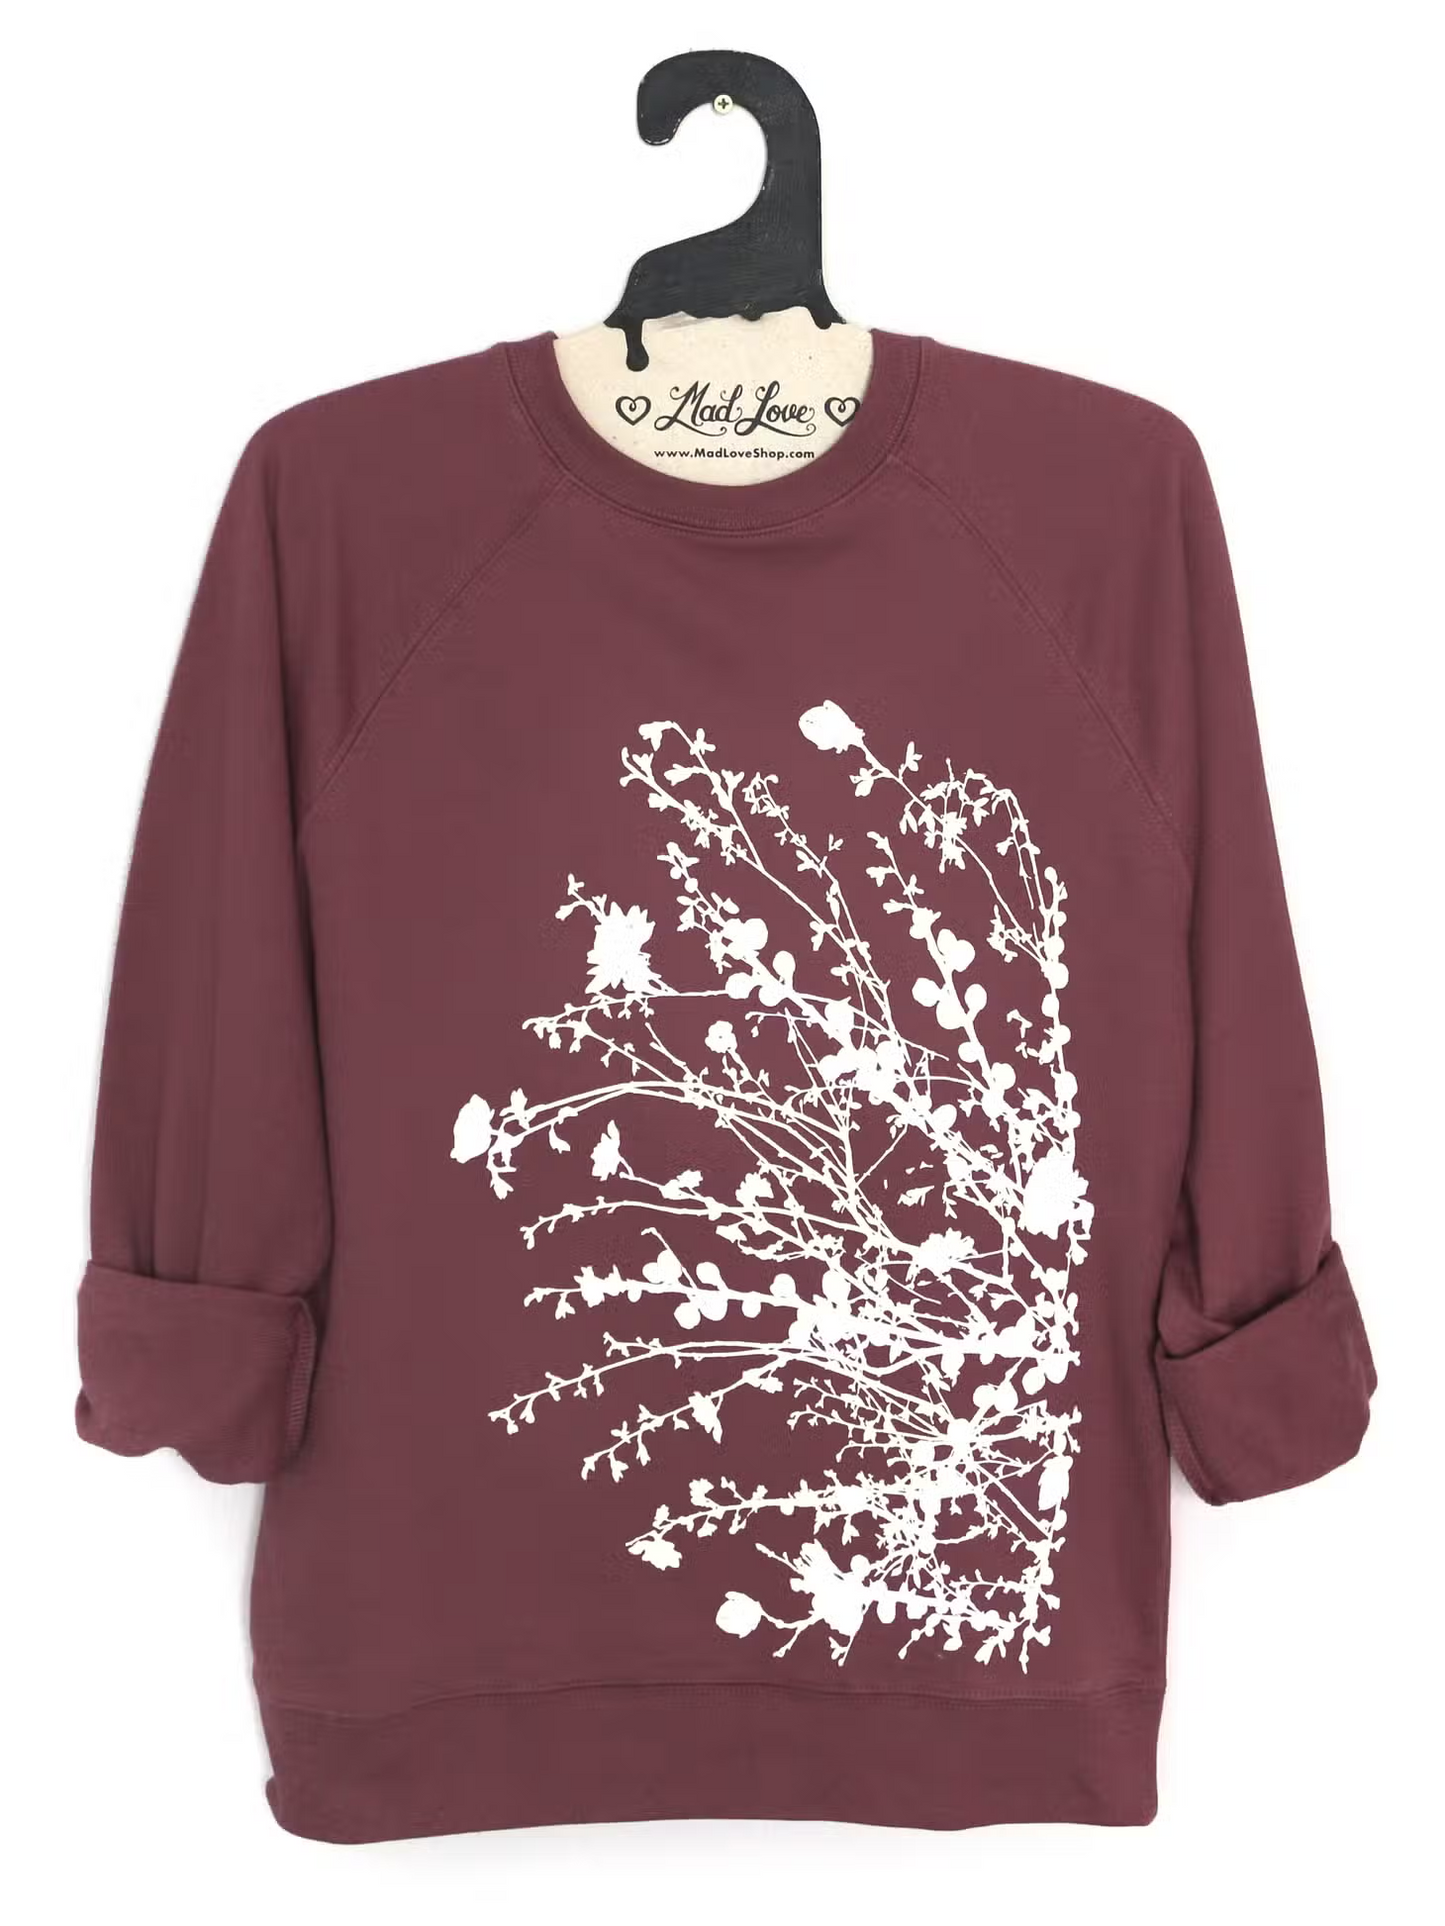 Flowering Branches Sweatshirt